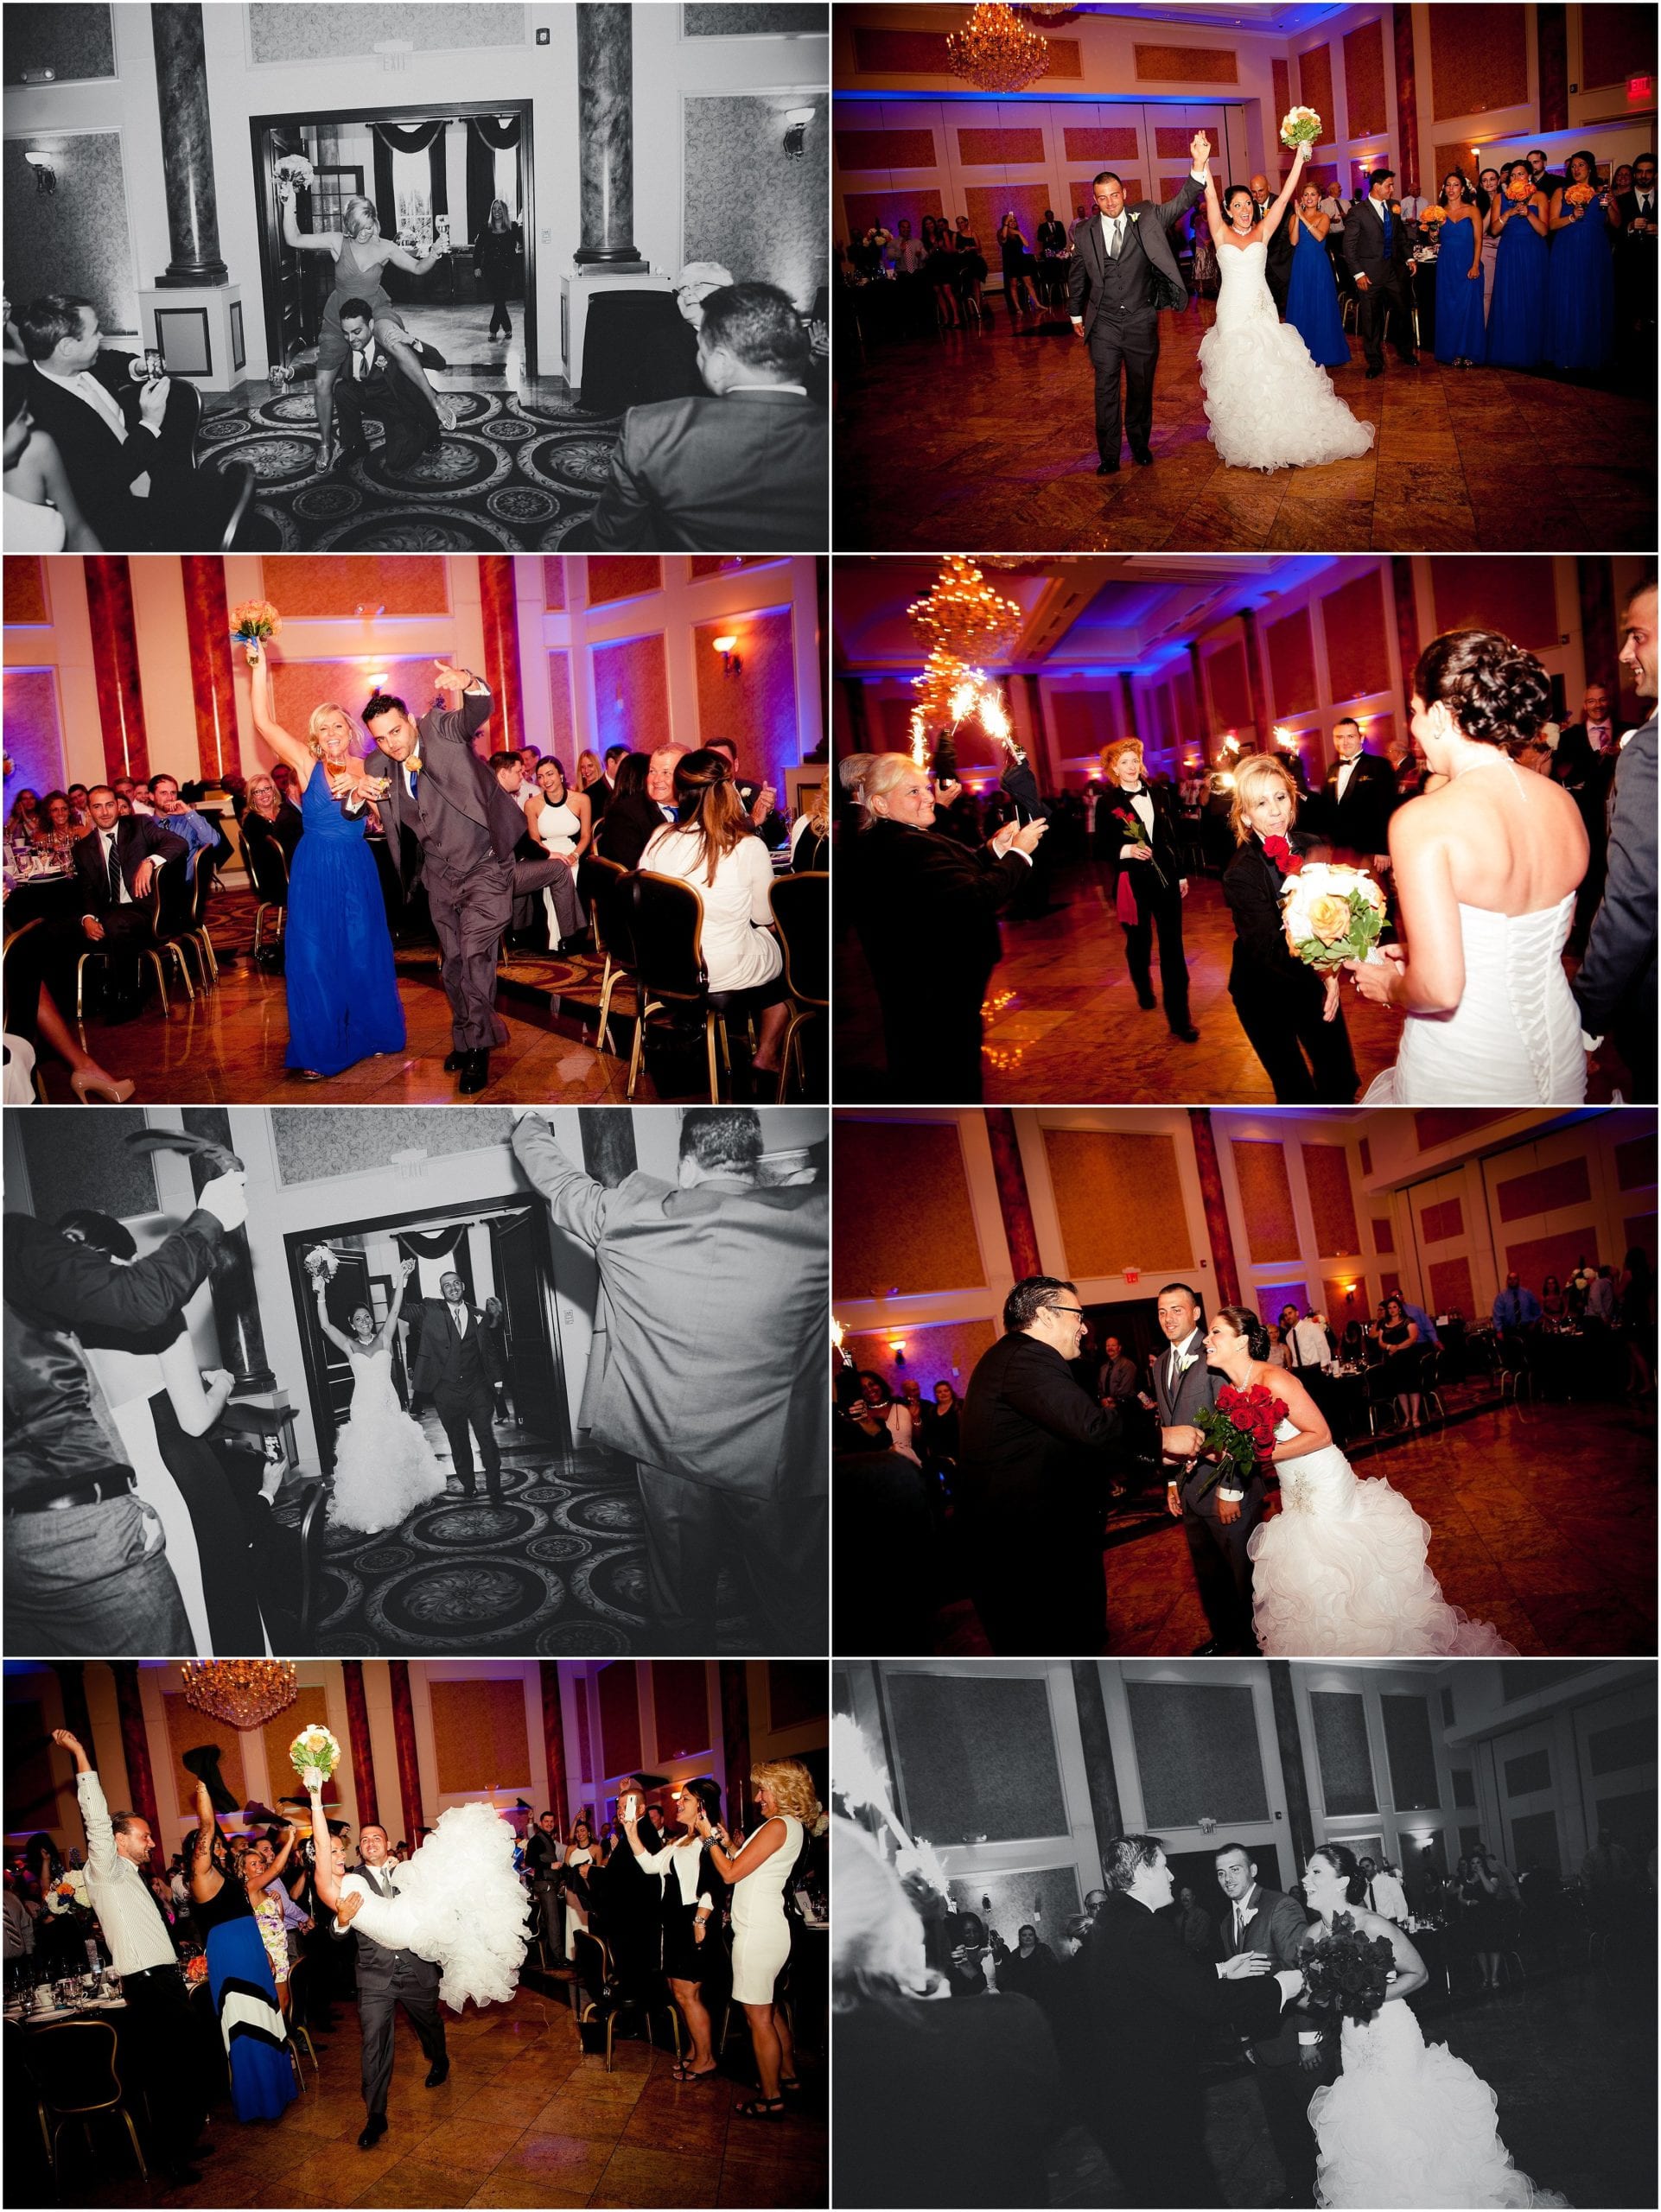 Merion, Weddings, AllisonAnne Studios, LucidFoto, South Jersey Weddings, The Knot, Allison Gallagher, Engagements, Wedding Photographers, Hammonton NJ